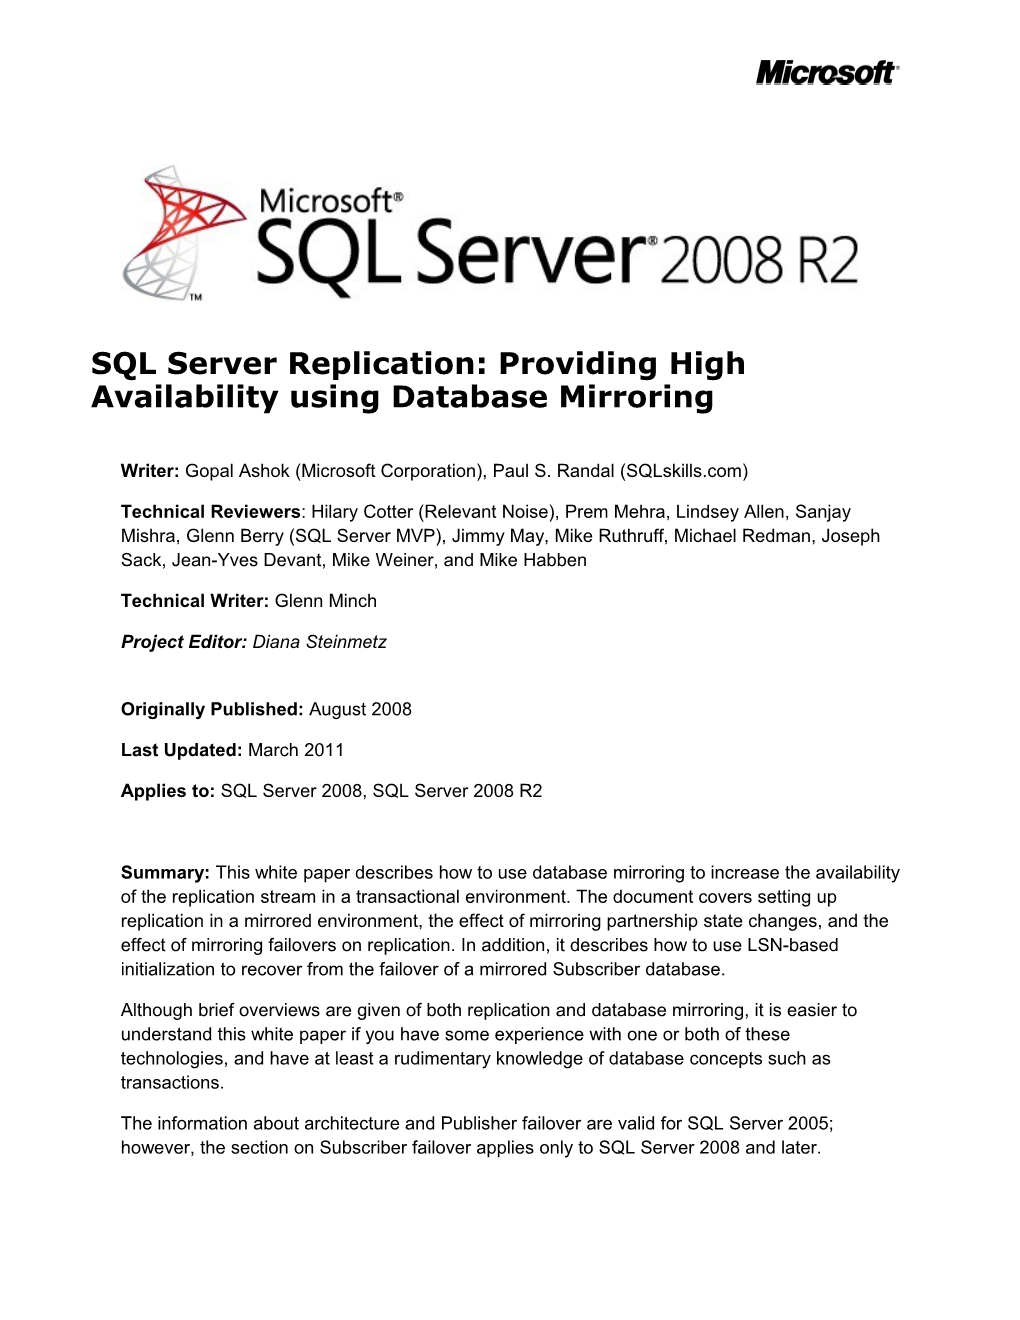 SQL Server Replication: Providing High Availability Using Database Mirroring